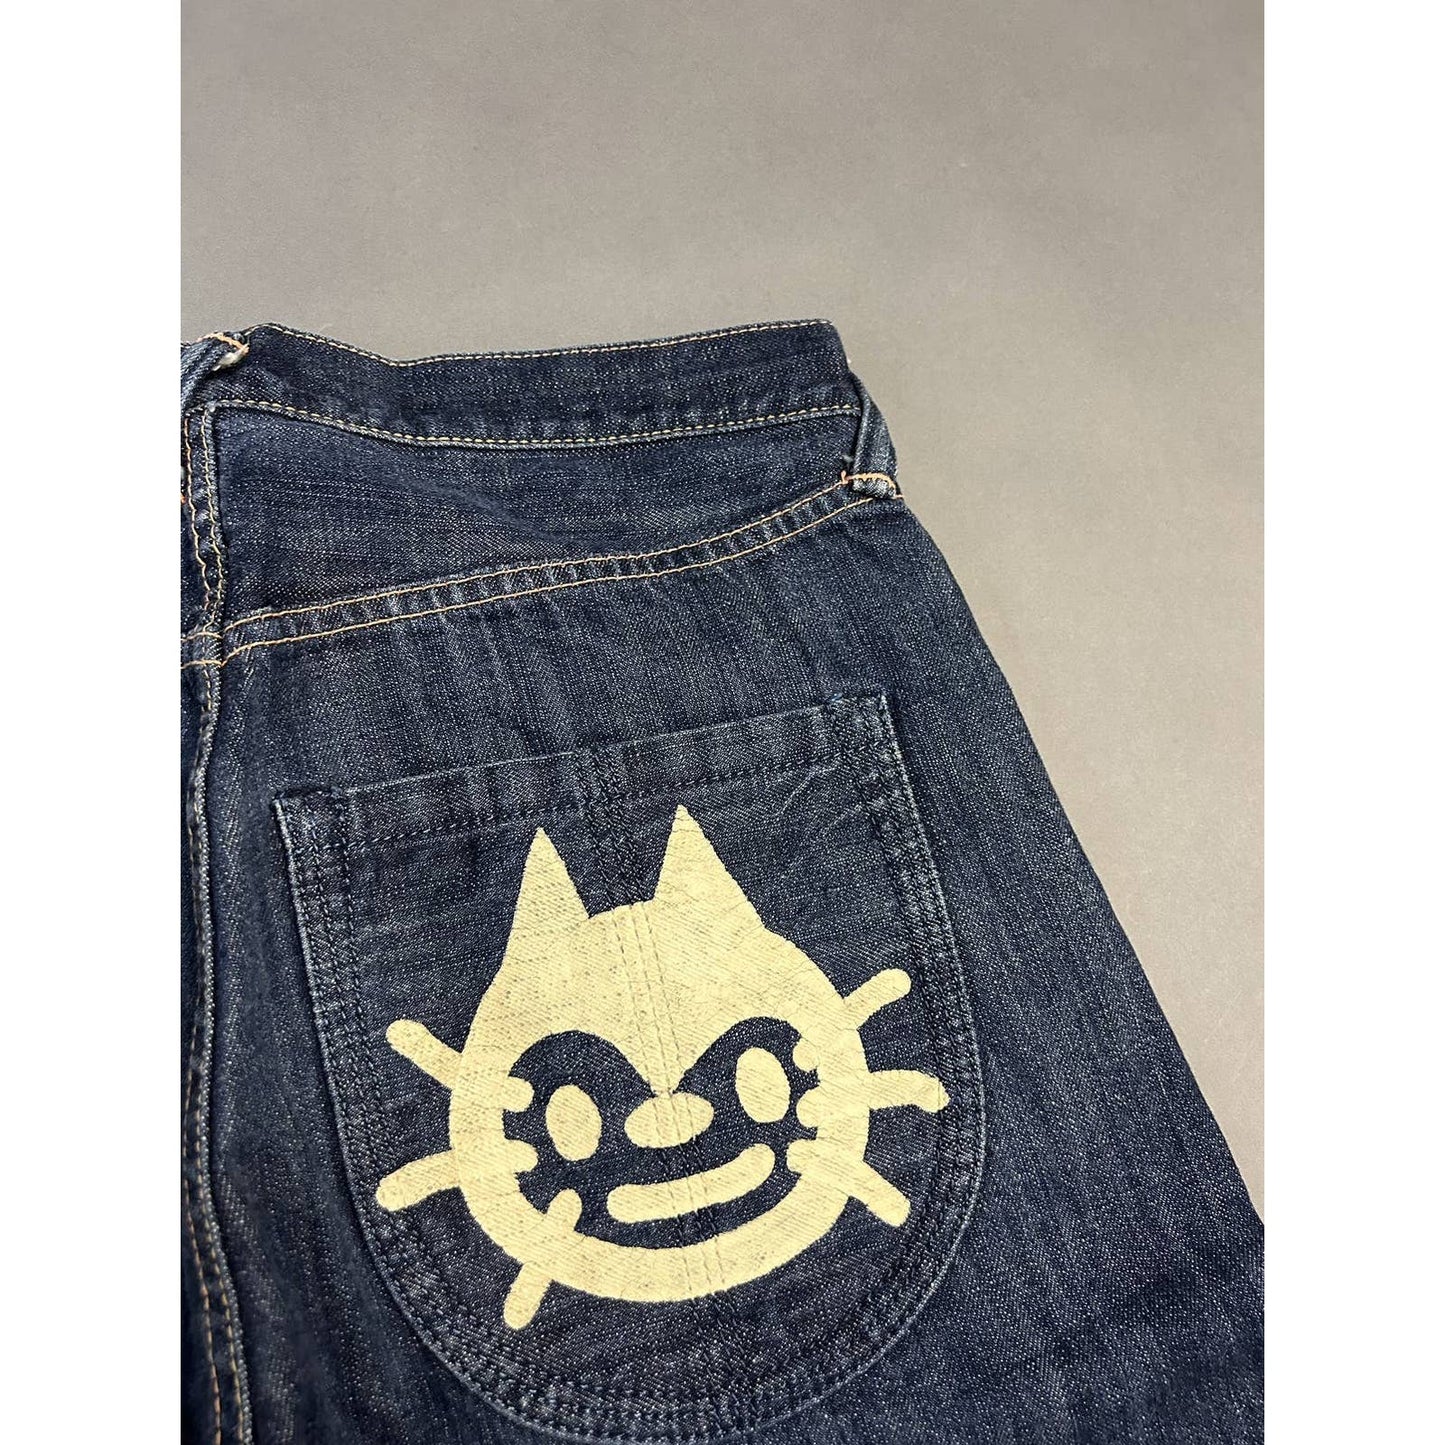 Evisu Yamane jeans cat face vintage selvedge denim Japan